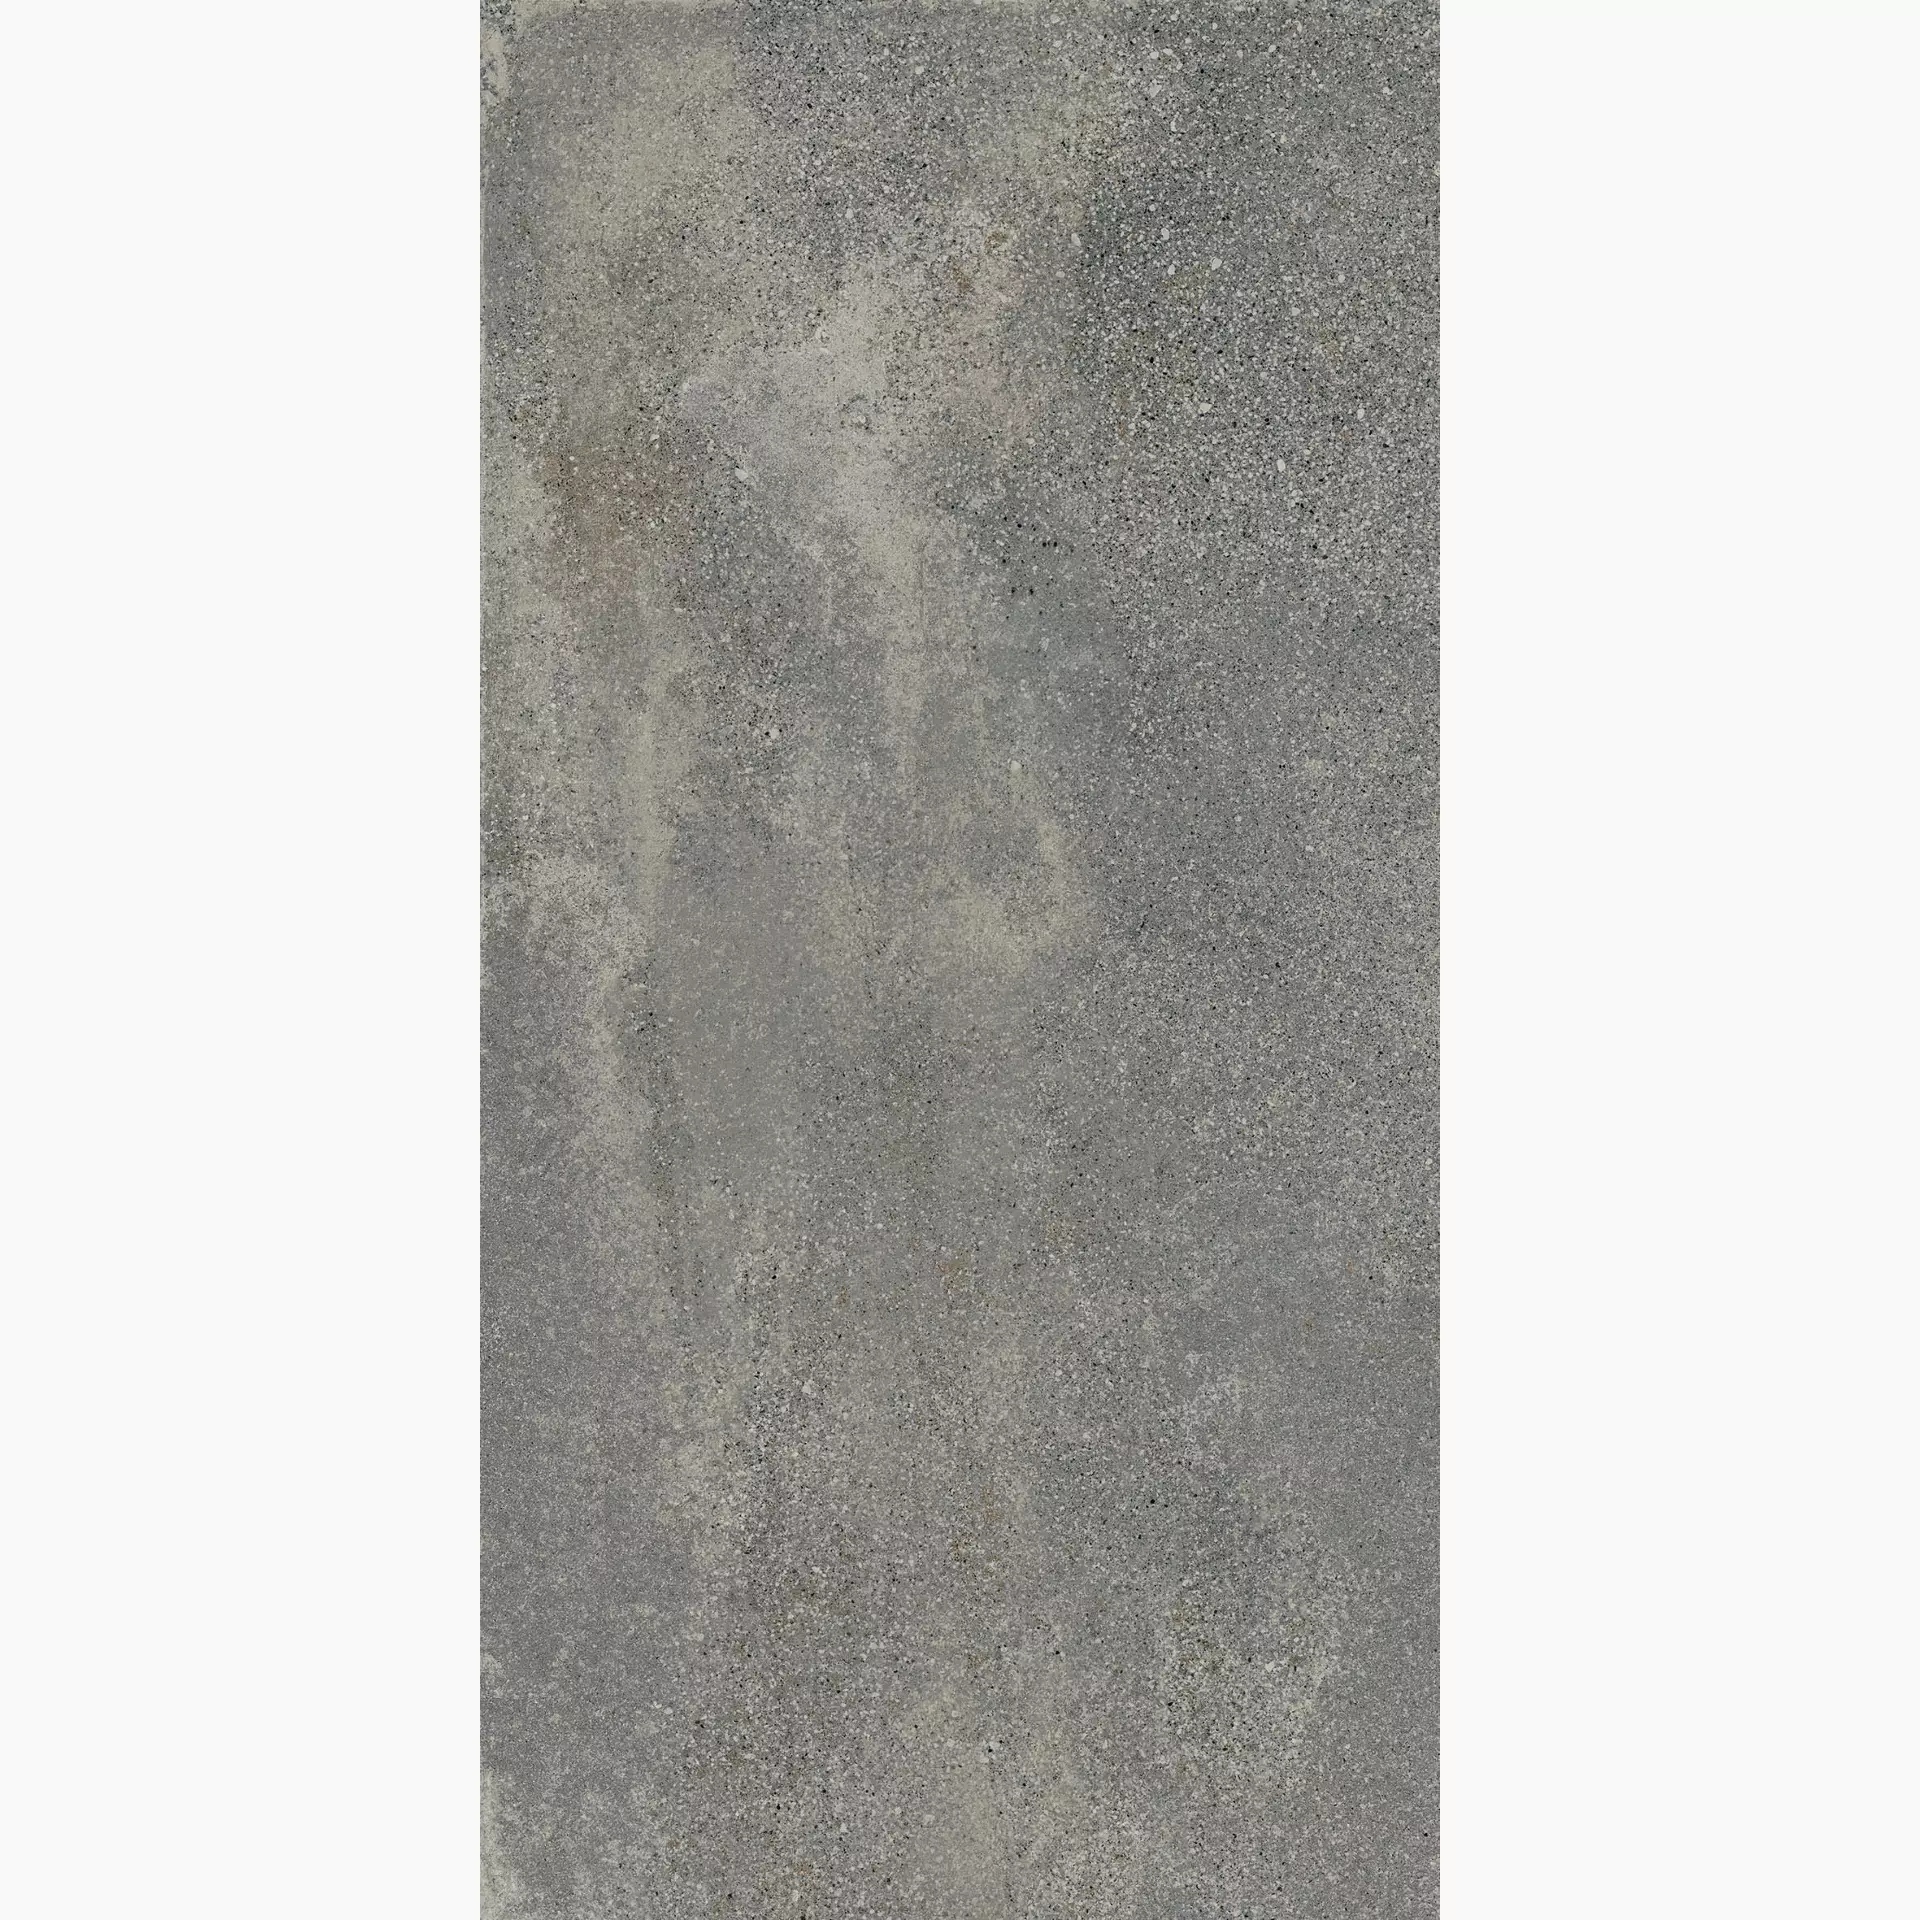 ABK Blend Concrete Grey Naturale PF60008259 30x60cm rectified 8,5mm